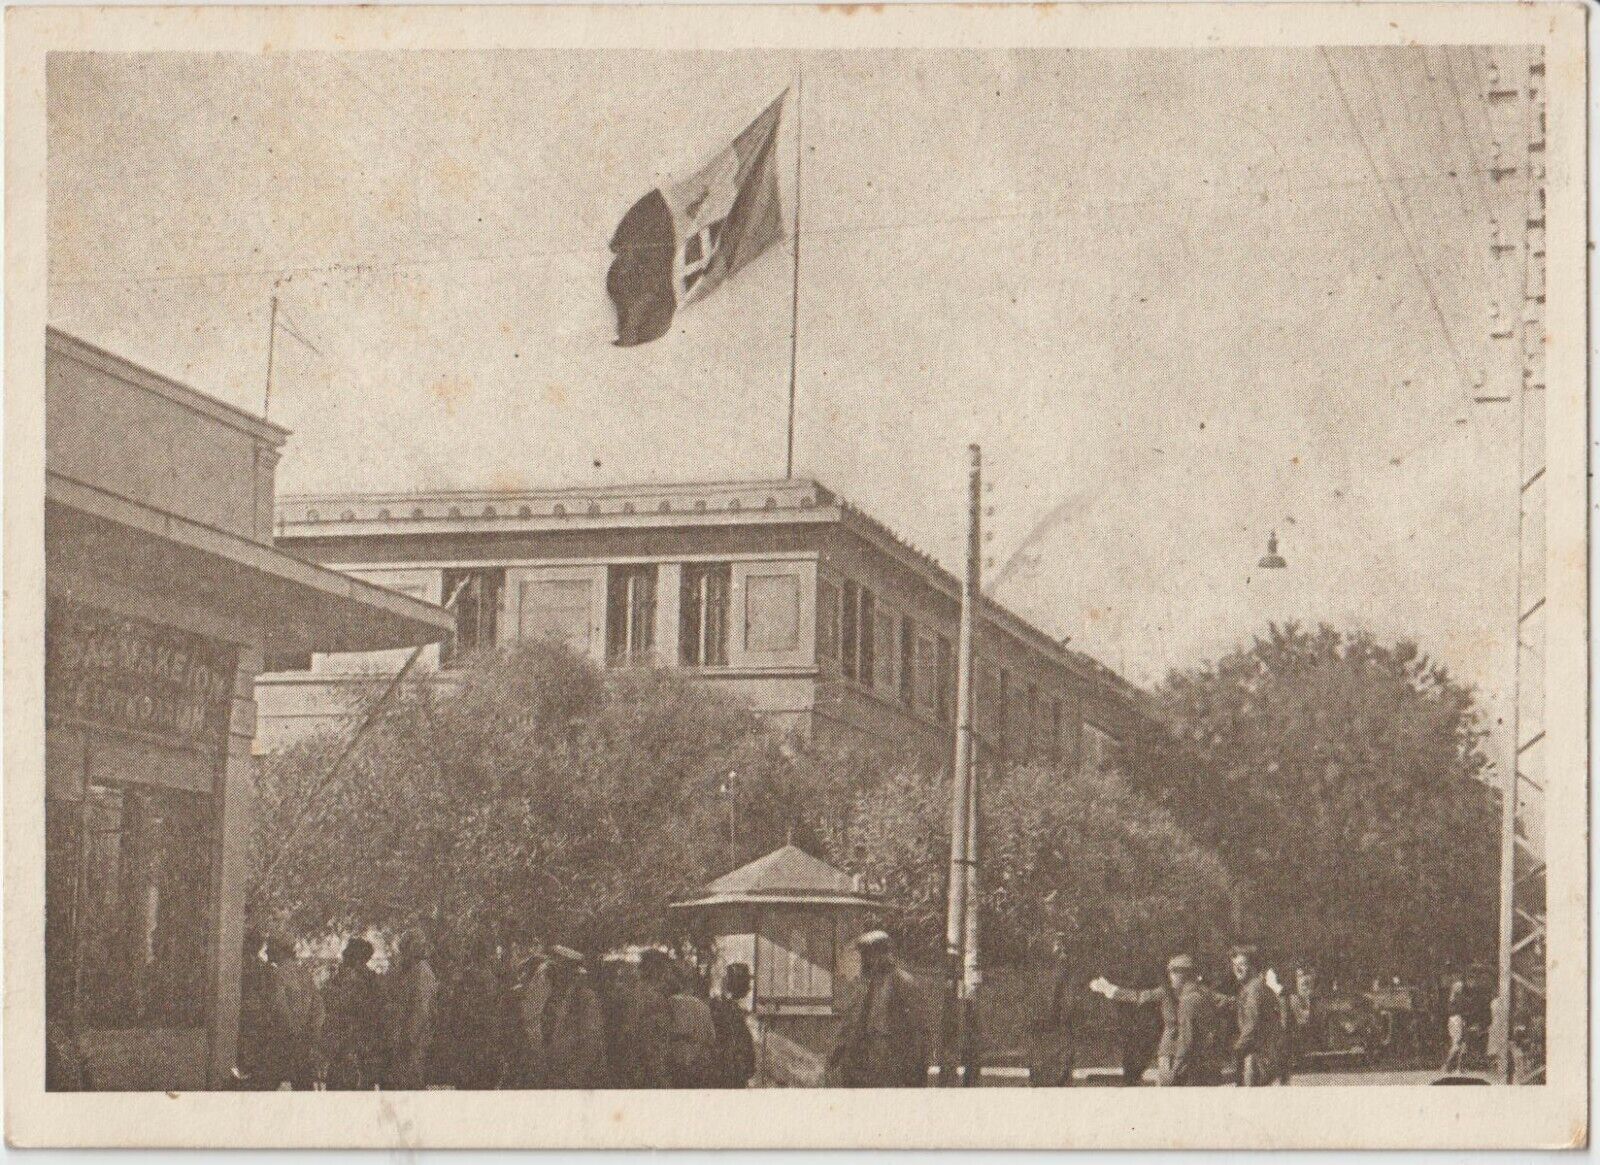 1941 ITALY GREECE CORINTH-HIGH CORINTHIAN MILITARY PRESIDIUM.GOVERNAMENT PALACE